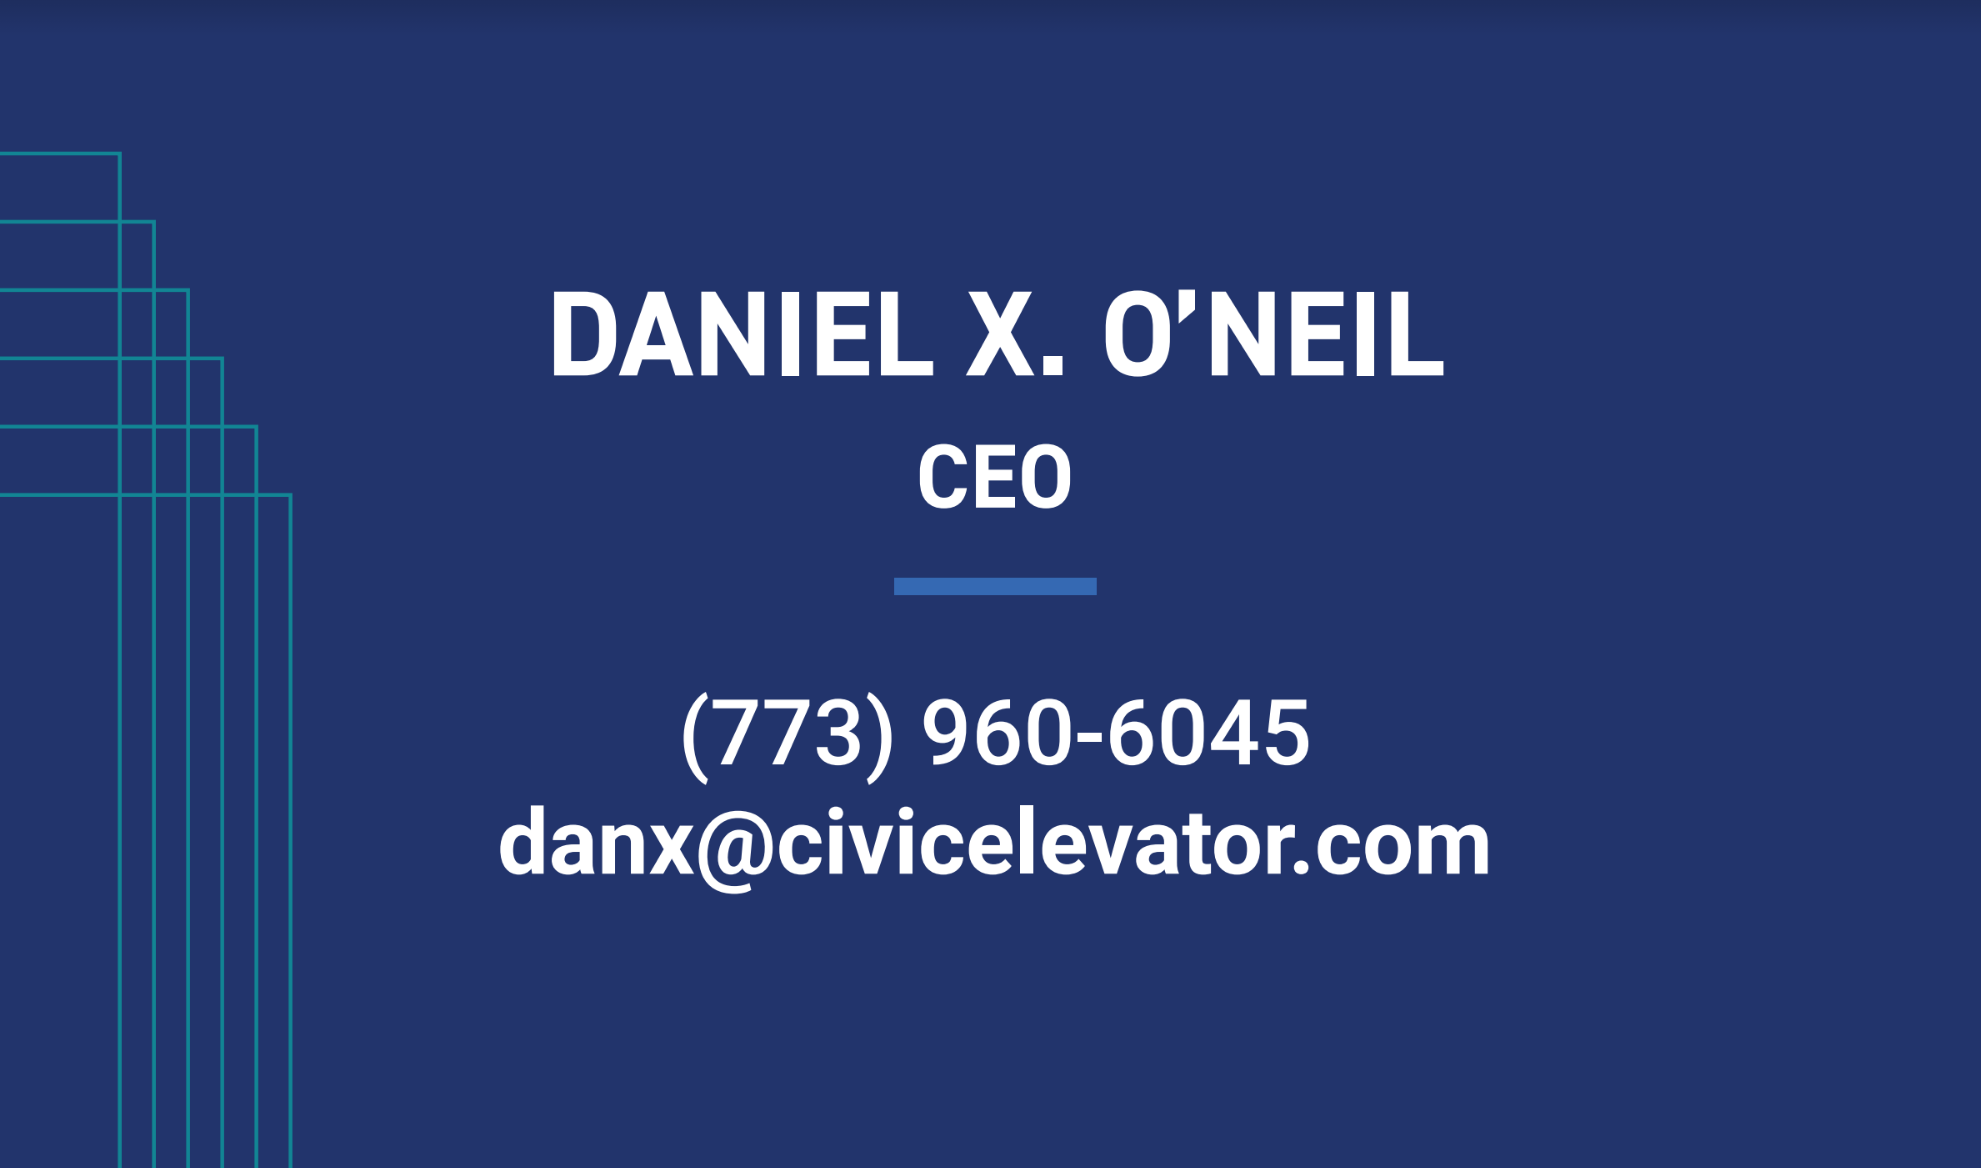 Blue business card of Daniel X. O'Neil, CEO of Civic Elevator